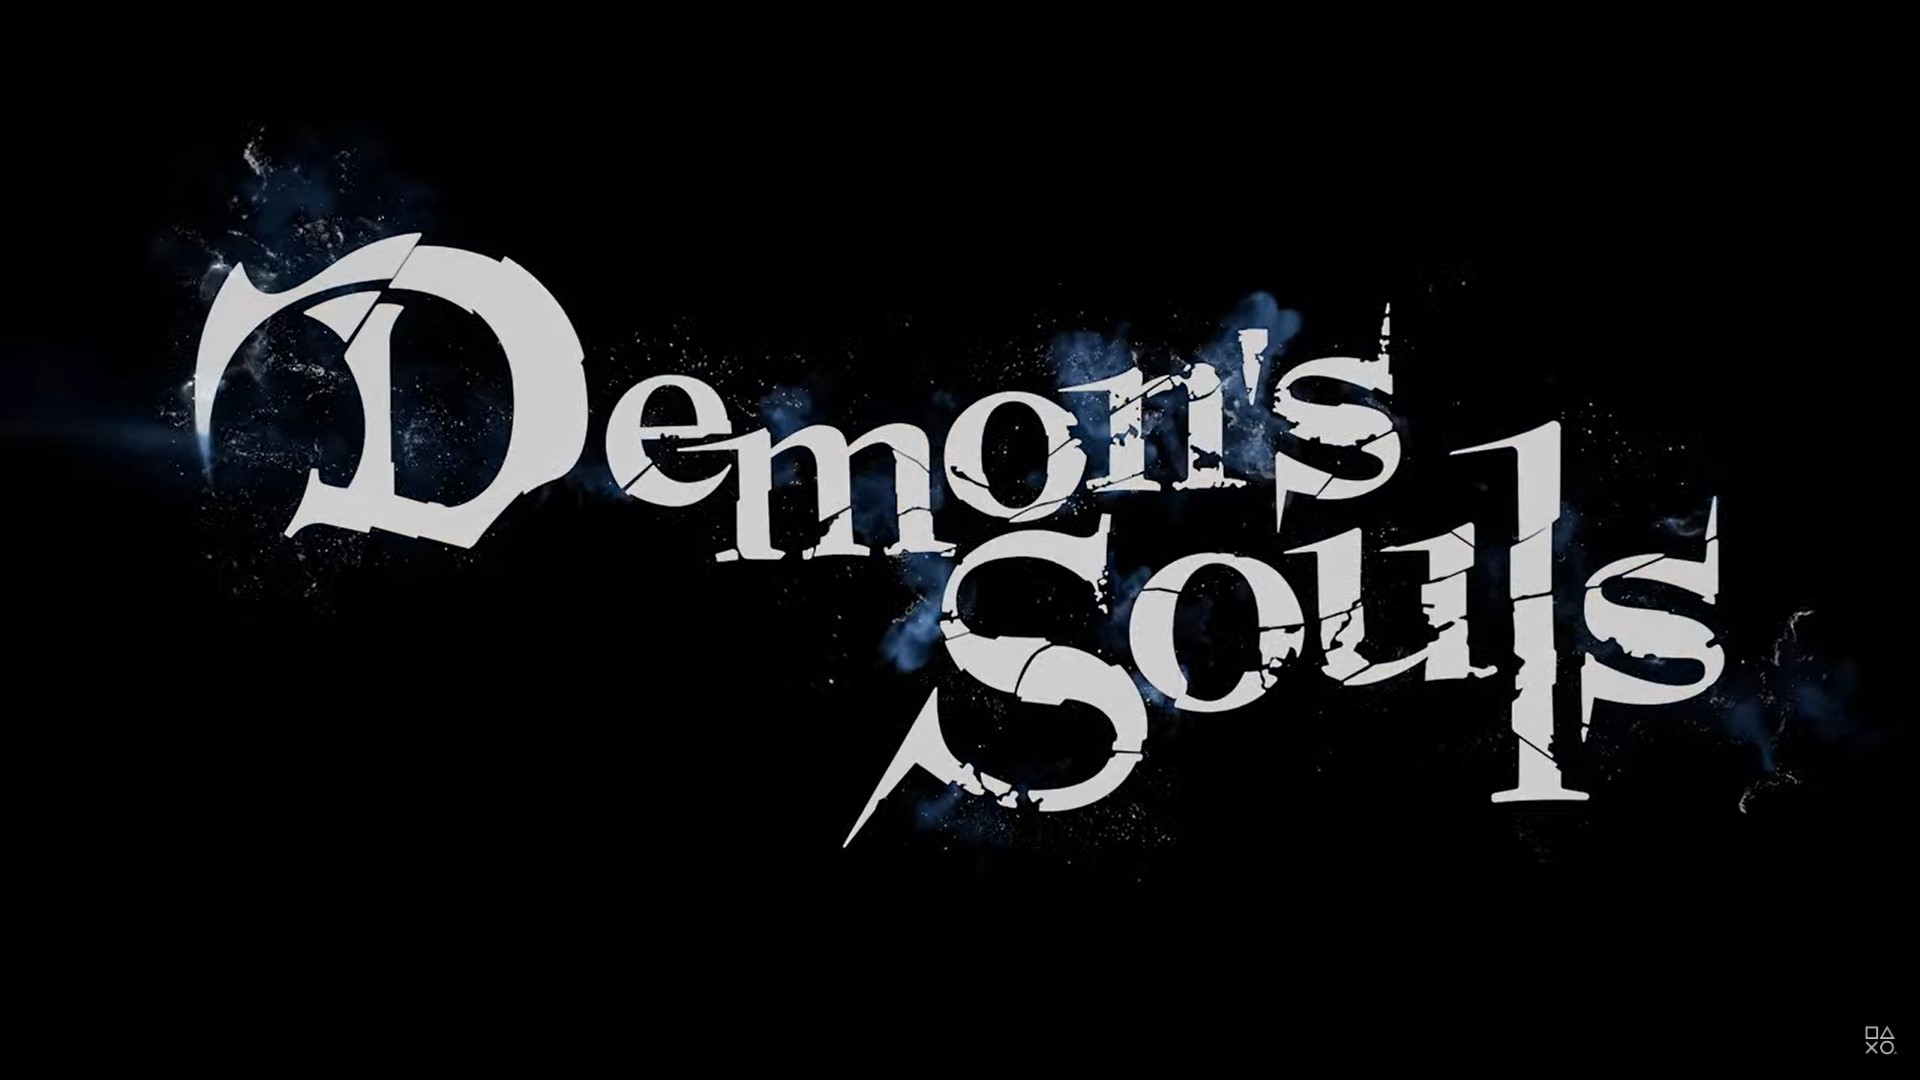 How To Get Phalanx’s Trophy Demon Souls?